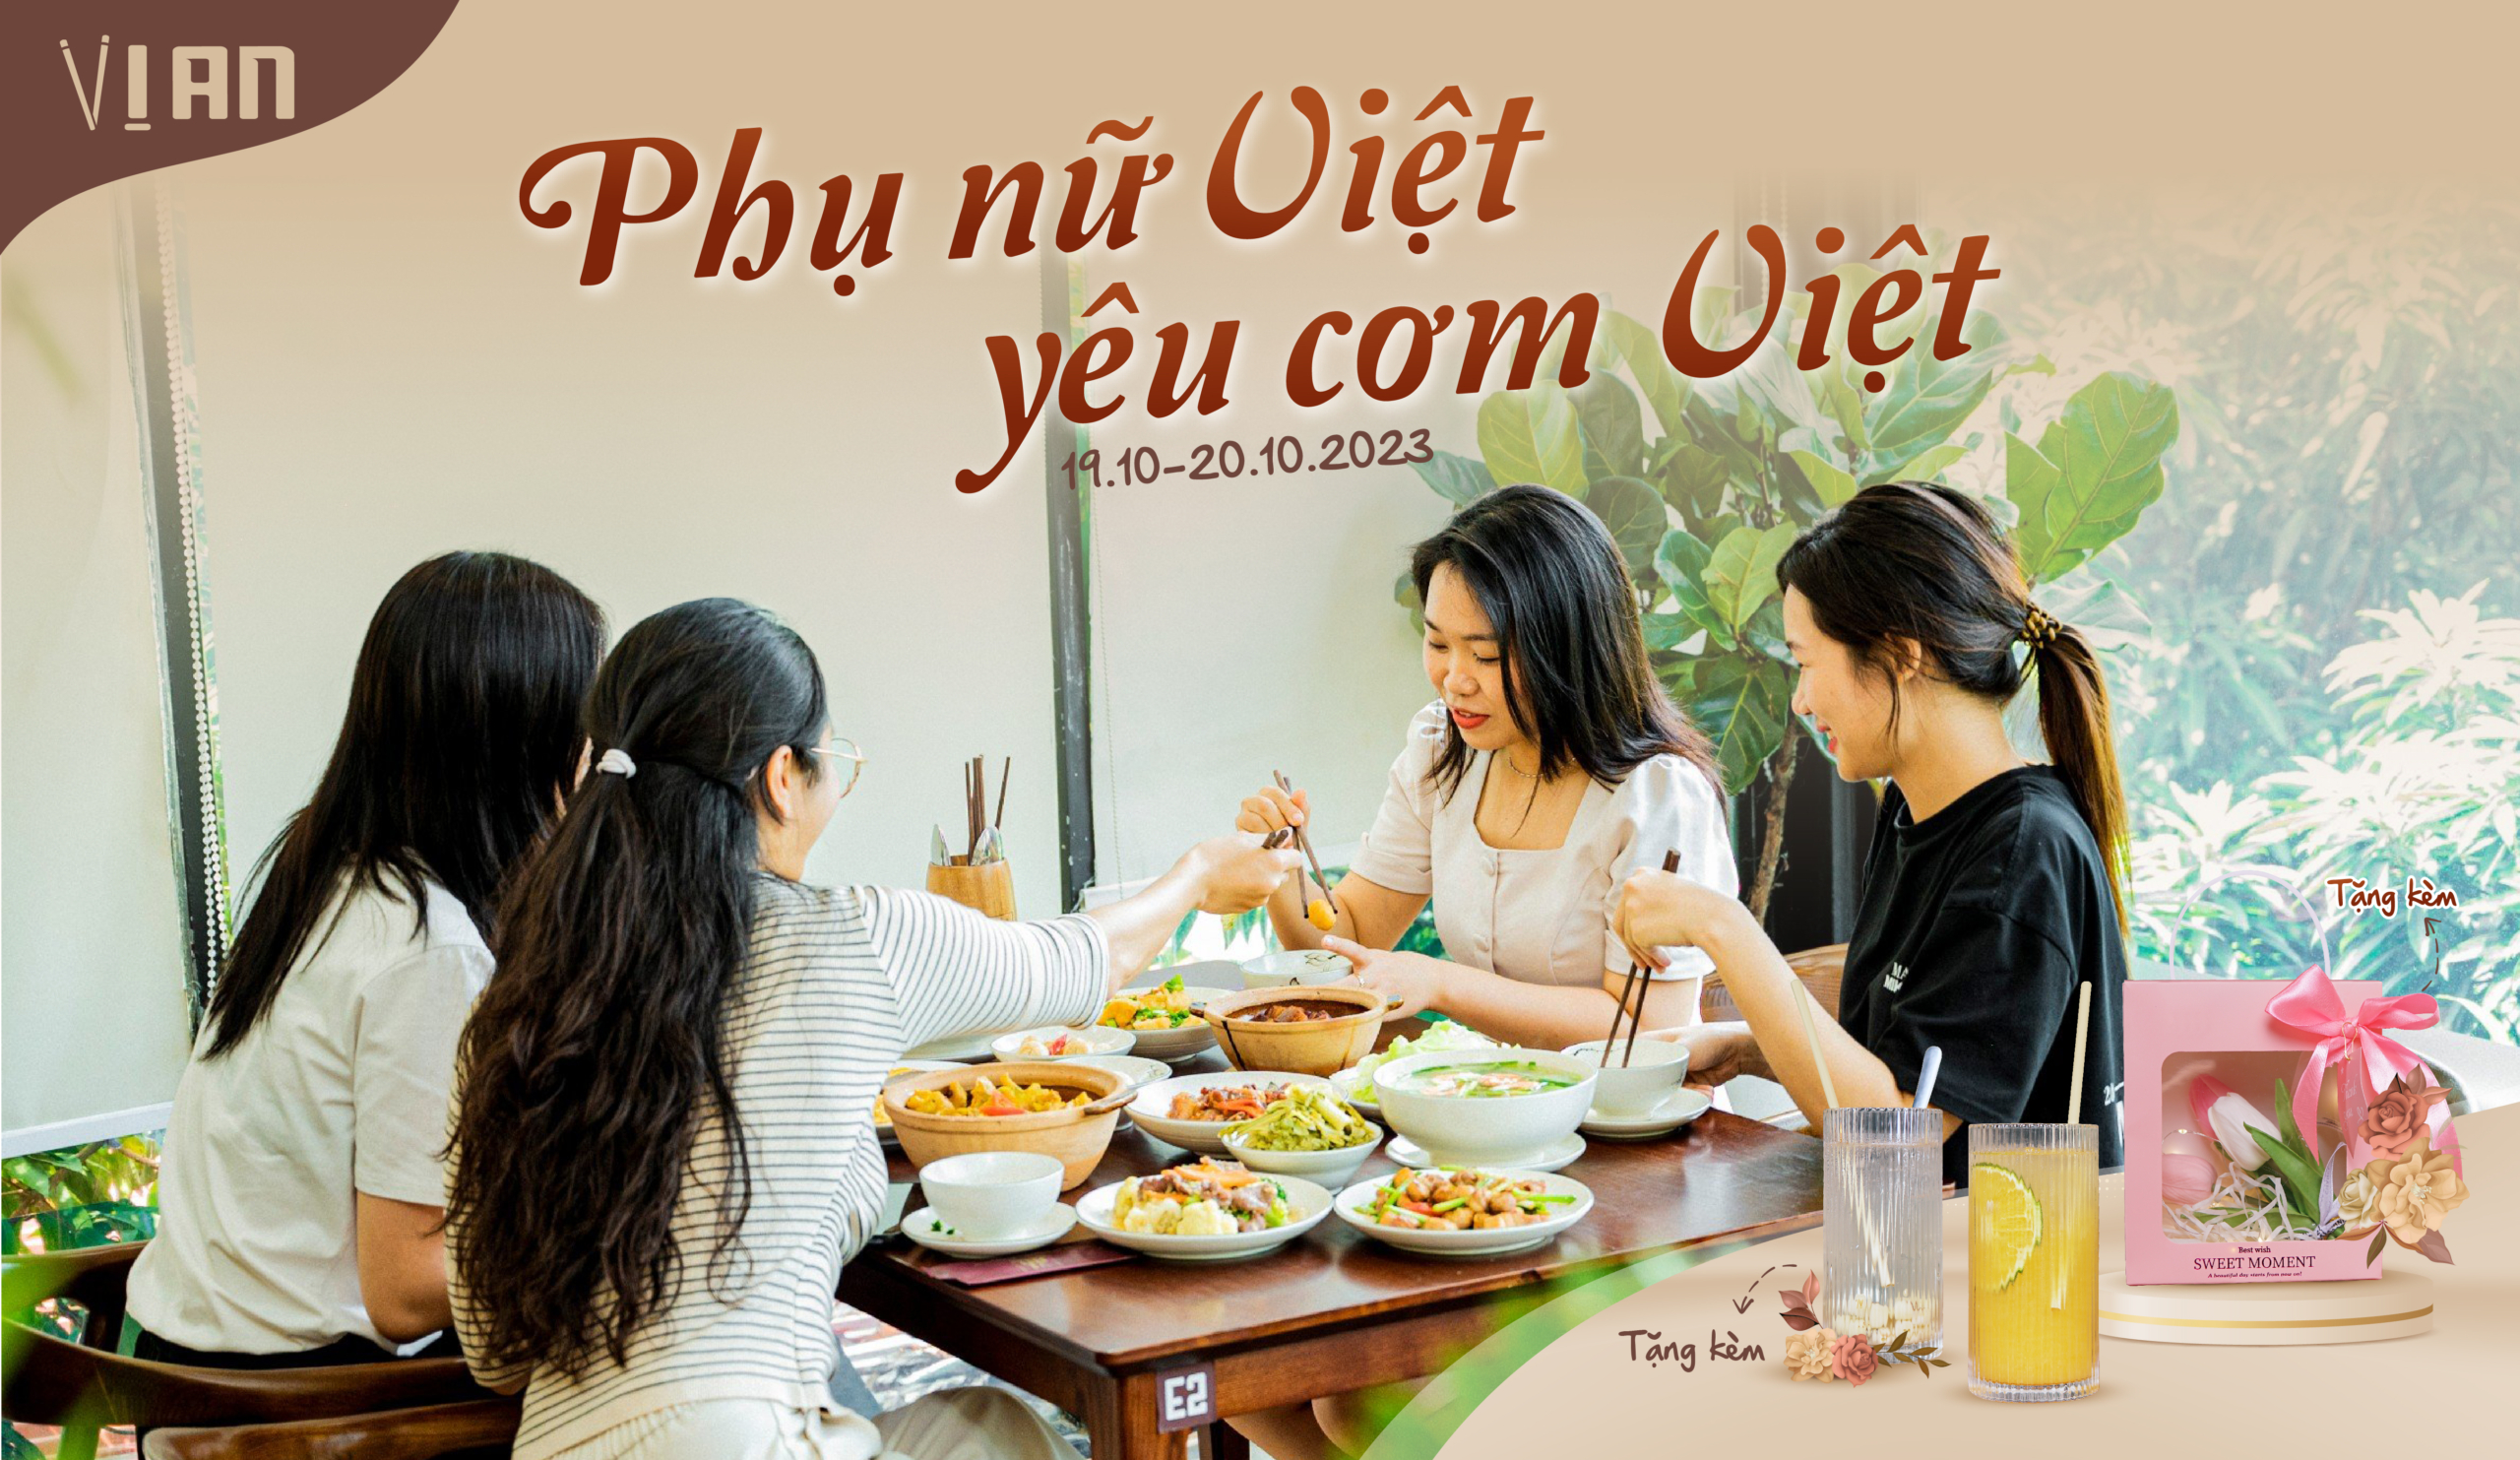 Hanoi Food Review